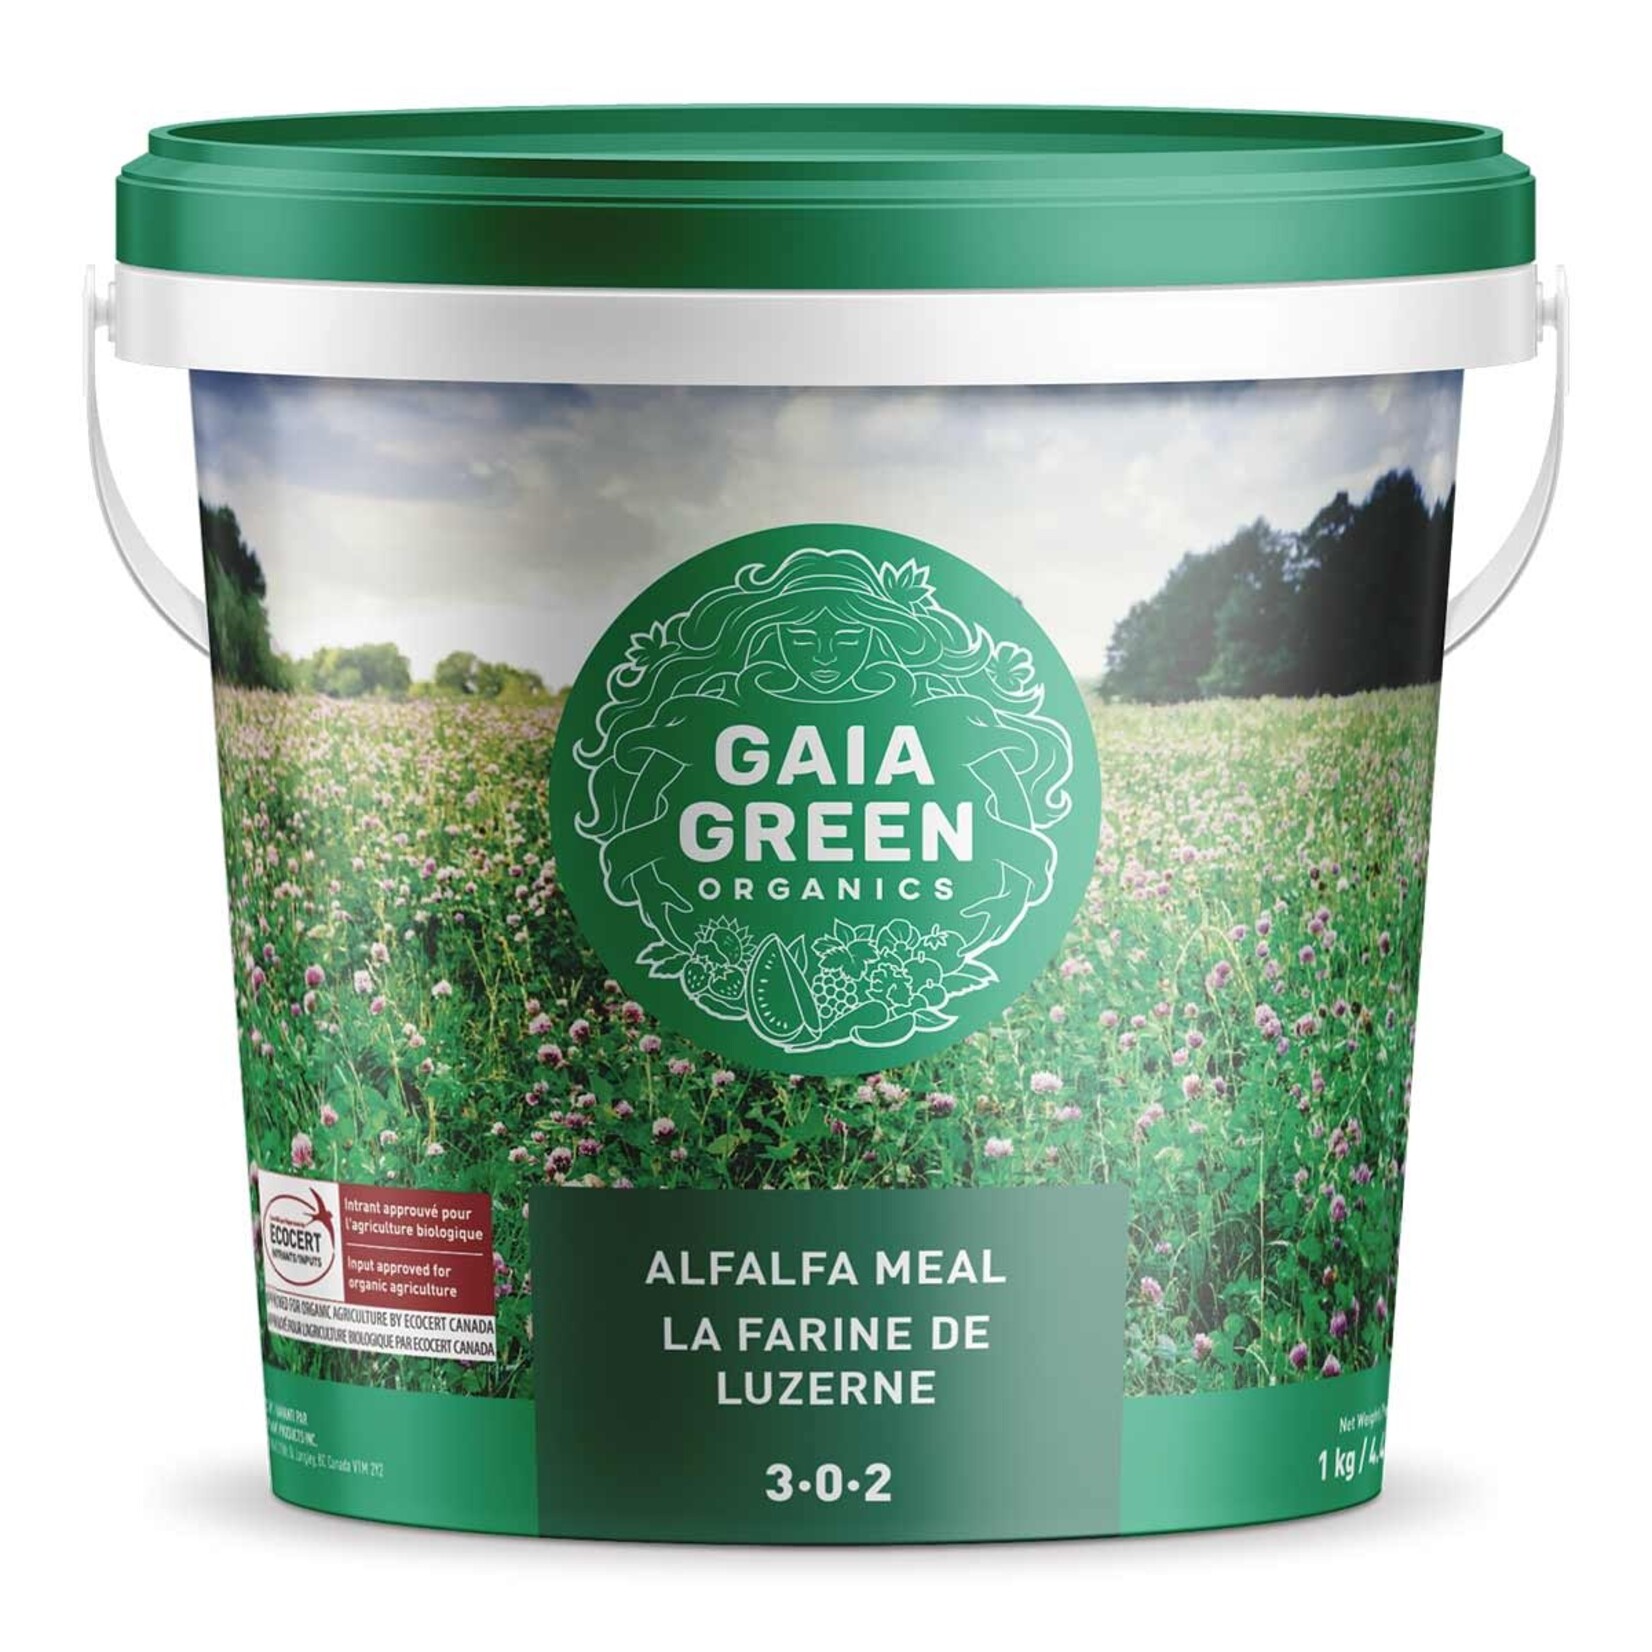 Gaia Green Alfalfa Meal 3-0-2 - 1 kg